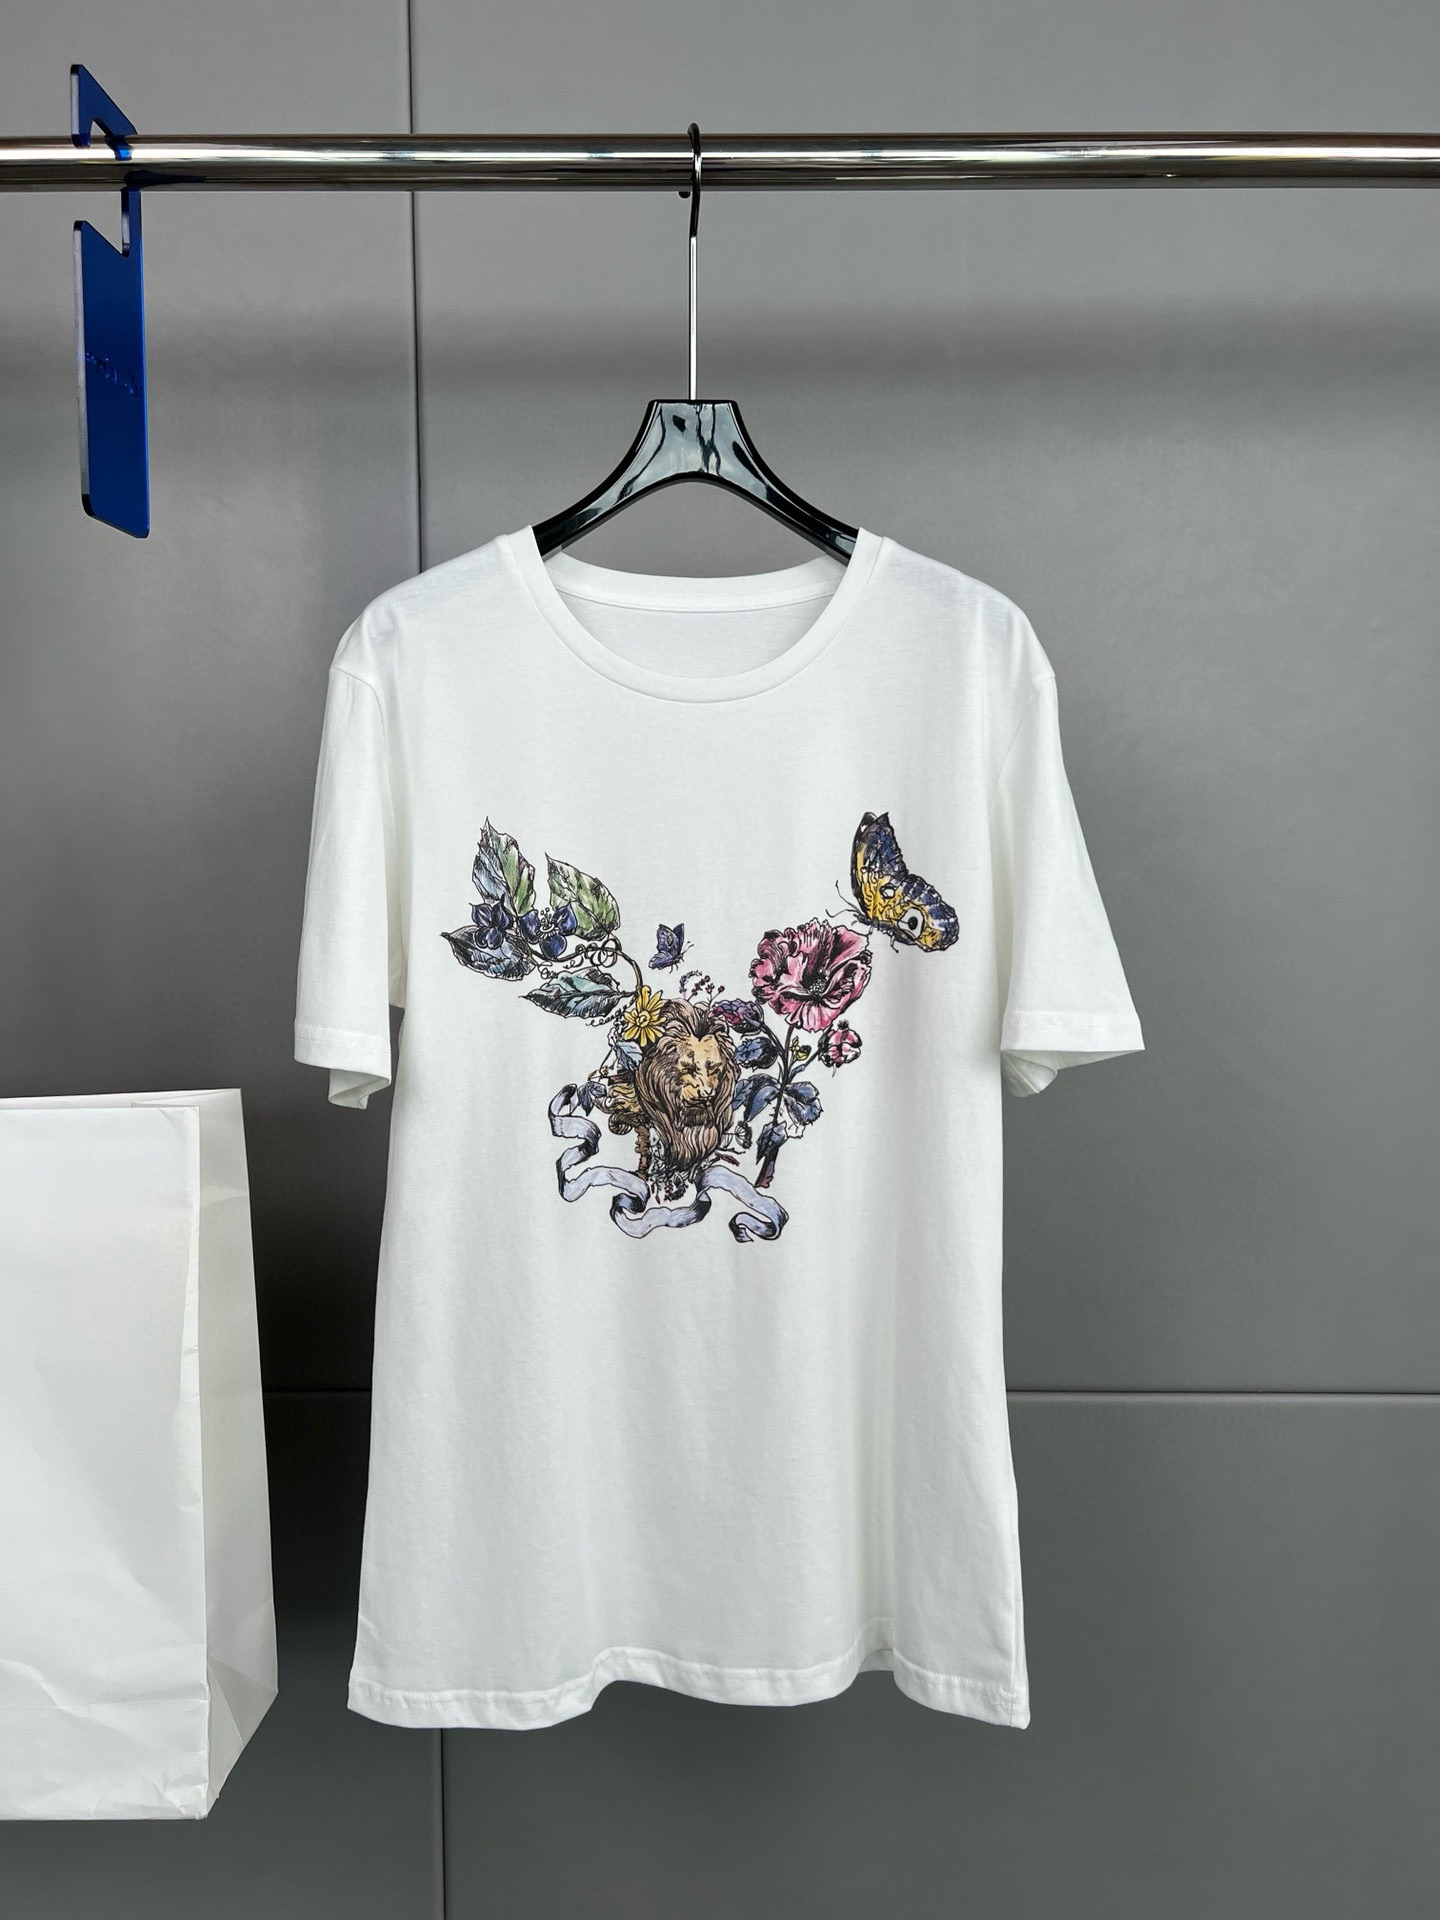 Di*r 新款 狮子蝴蝶花卉印花图案短袖T恤码数S  M  L